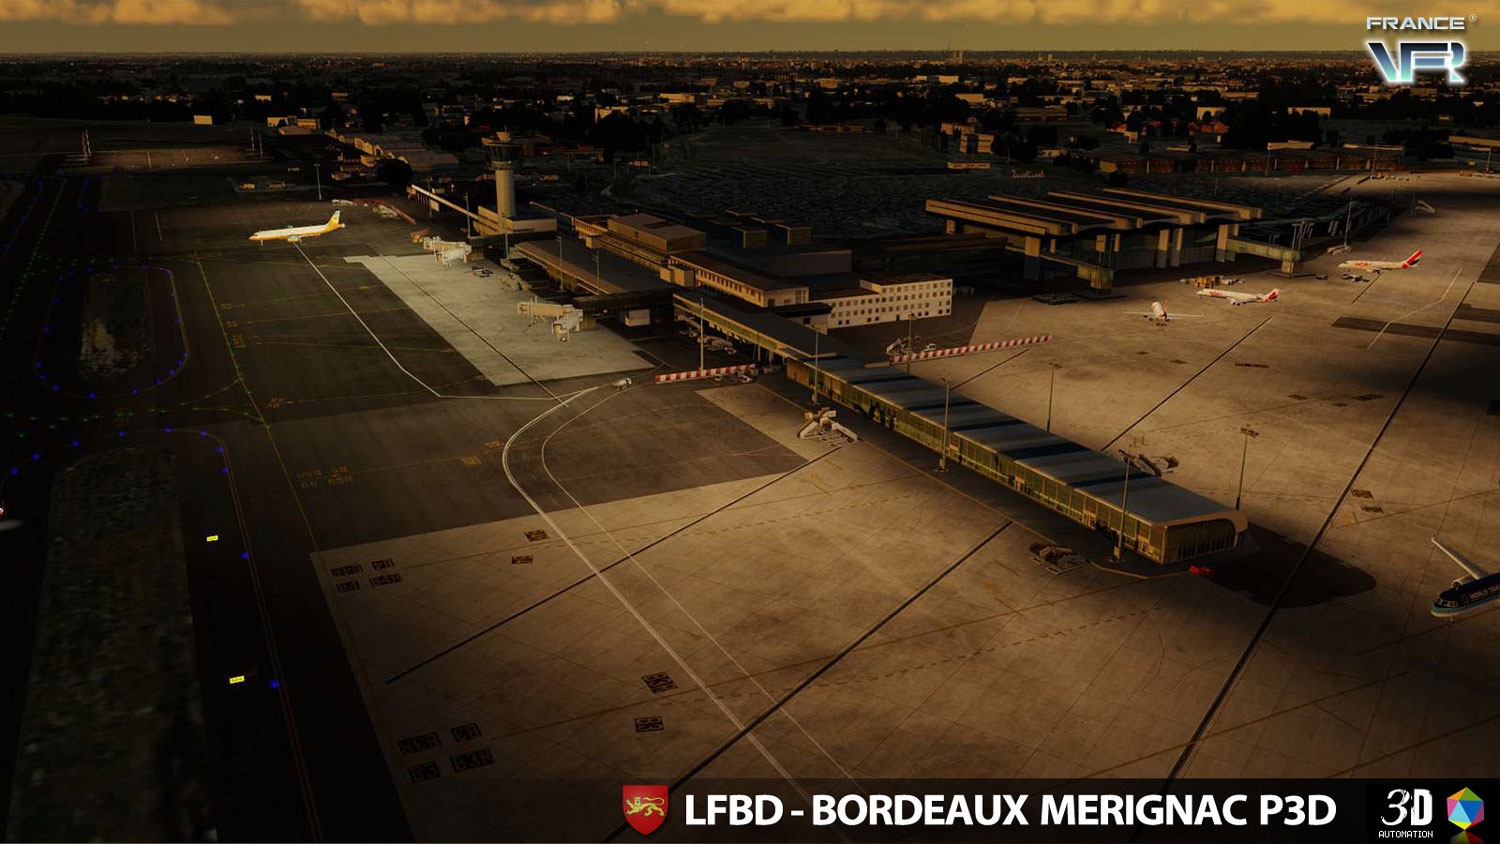 France VFR - LFBD - Bordeaux Merignac P3D V4/V5